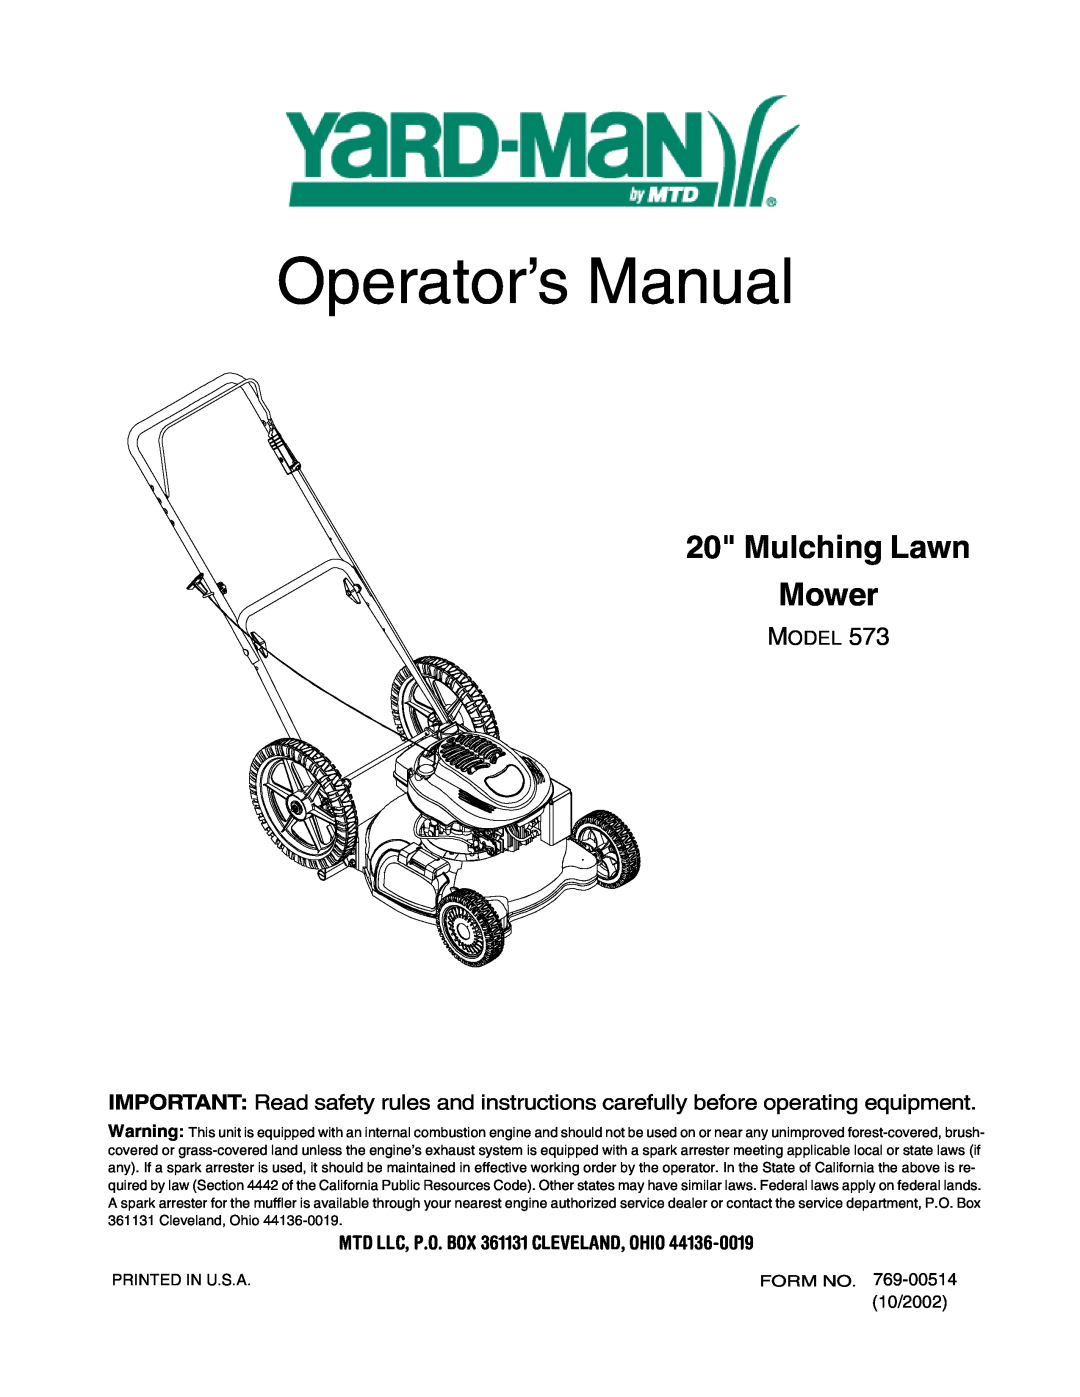 Yard-Man 573 manual Model, MTD LLC, P.O. BOX 361131 CLEVELAND, OHIO, Operator’s Manual, Mulching Lawn Mower 